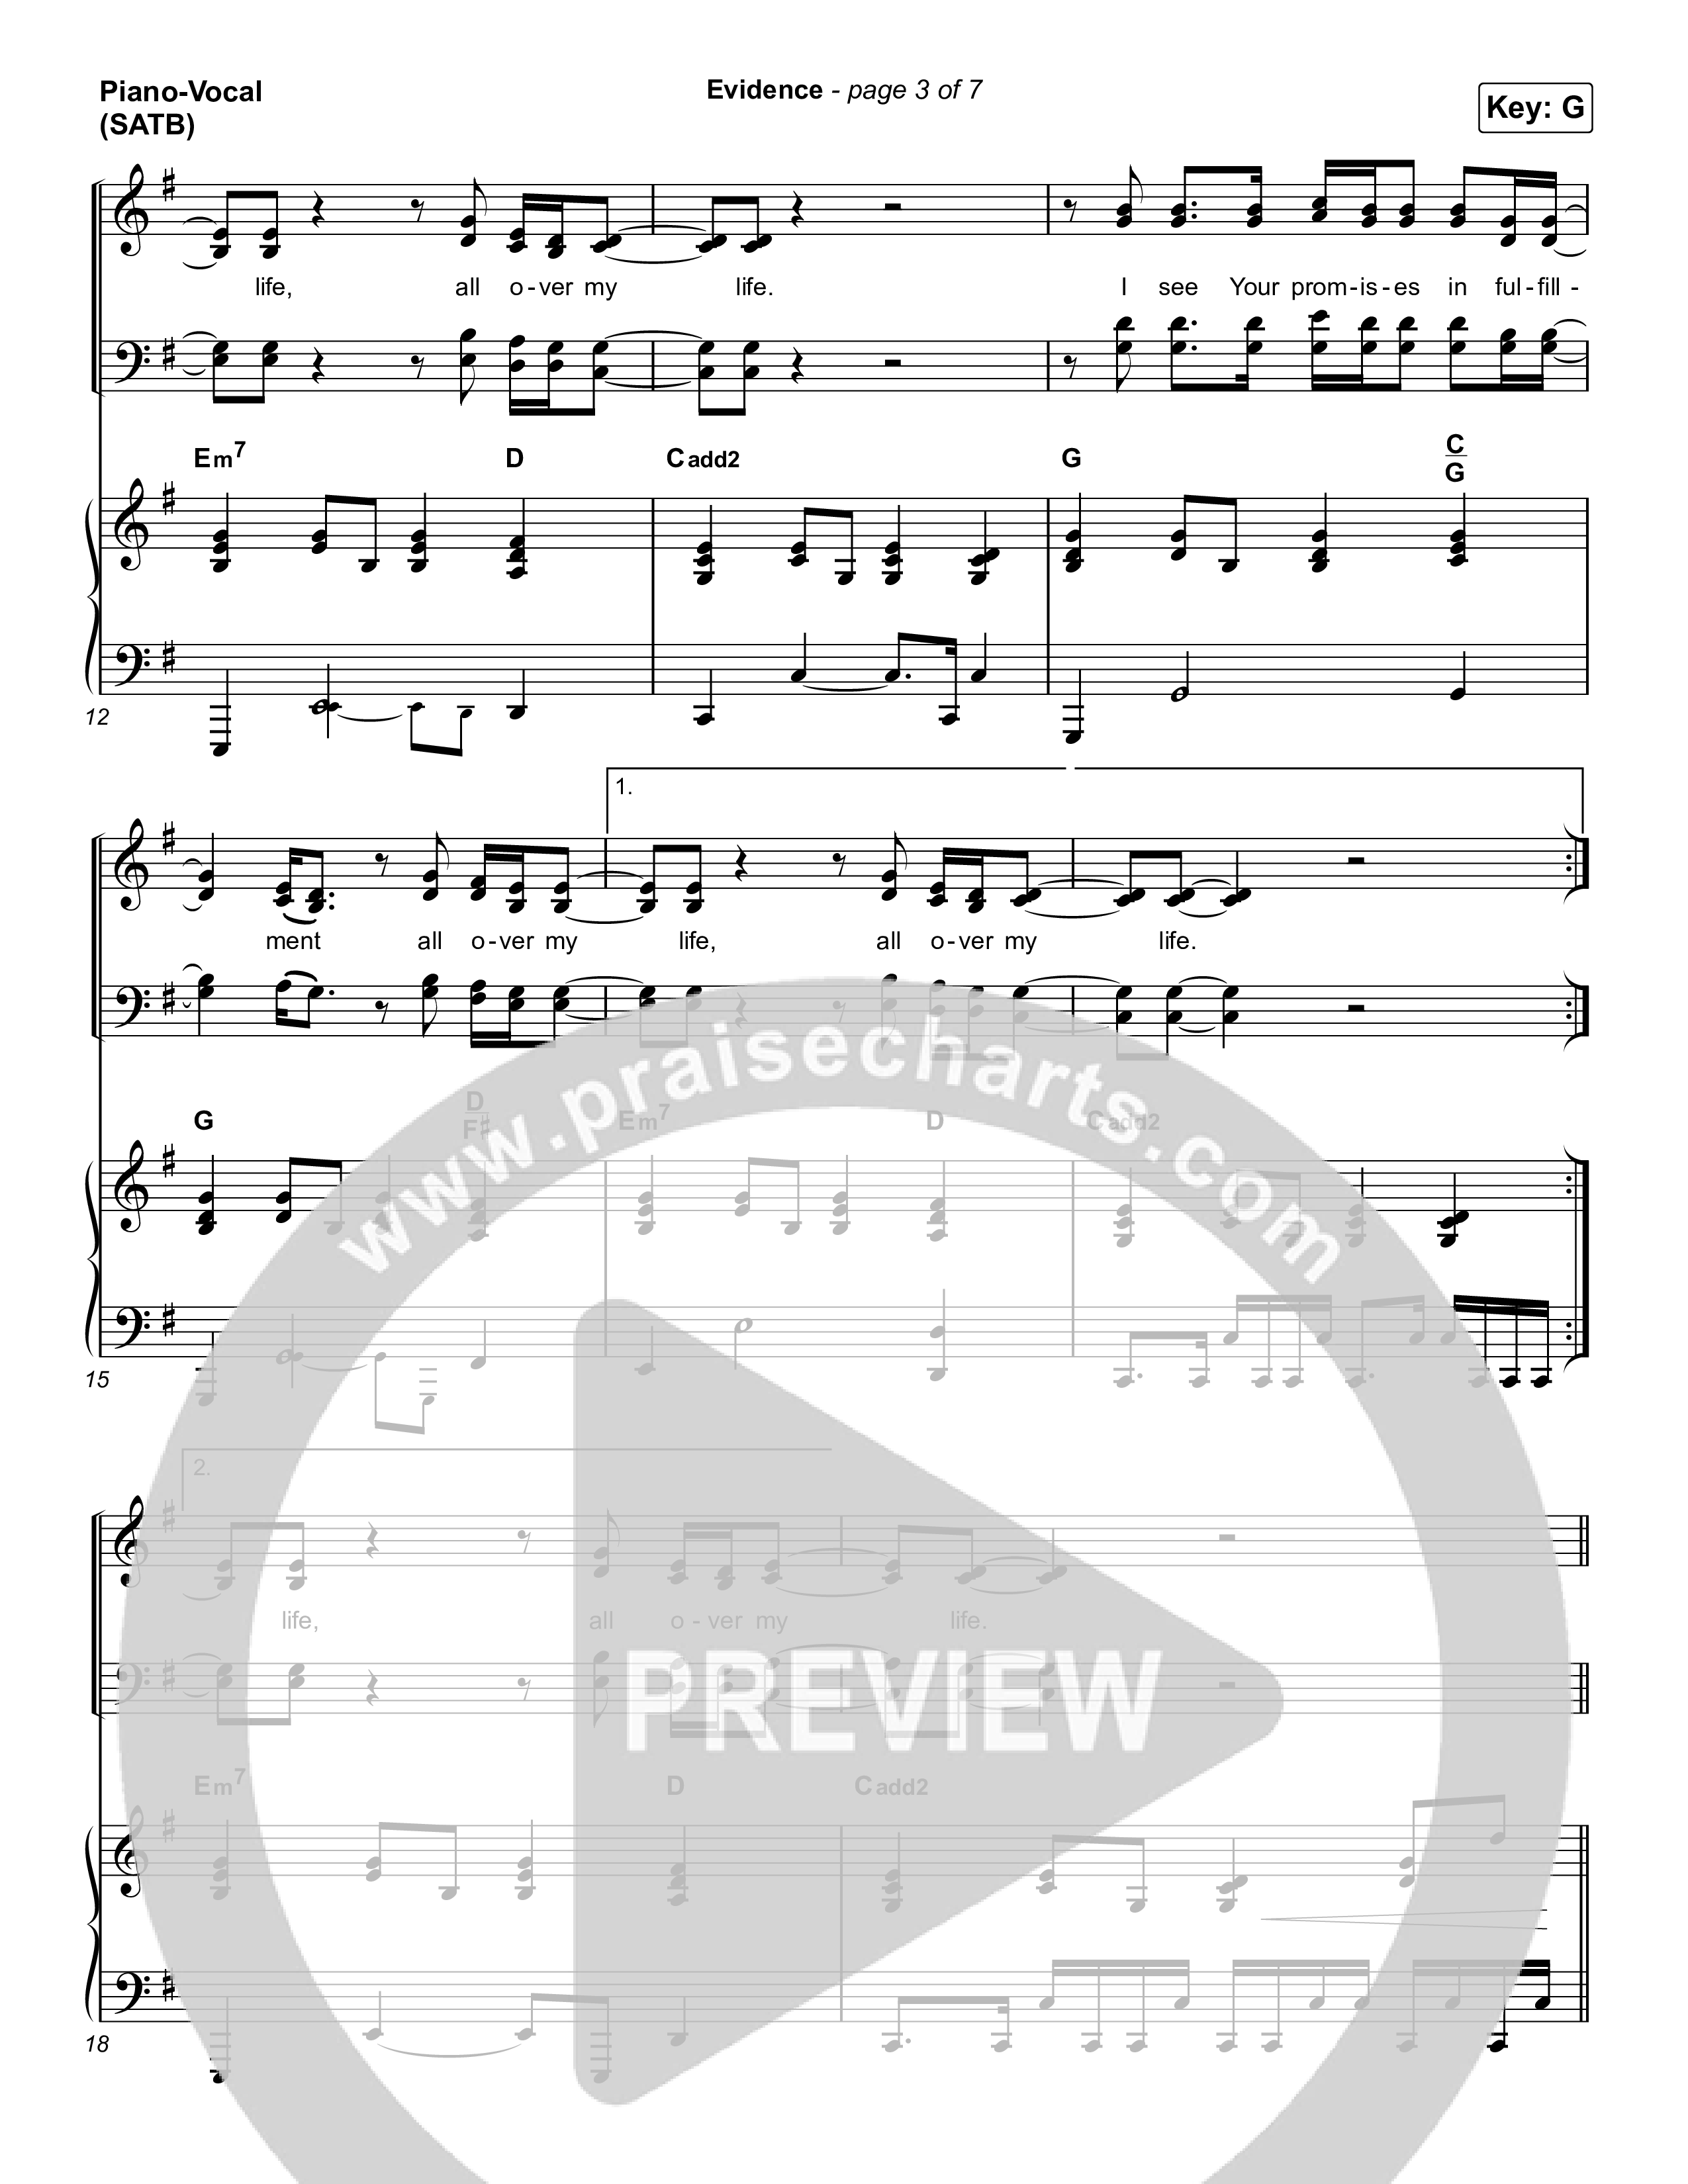 Evidence (Choral Anthem SATB) Piano/Vocal (SATB) (Josh Baldwin / Arr. Luke Gambill)